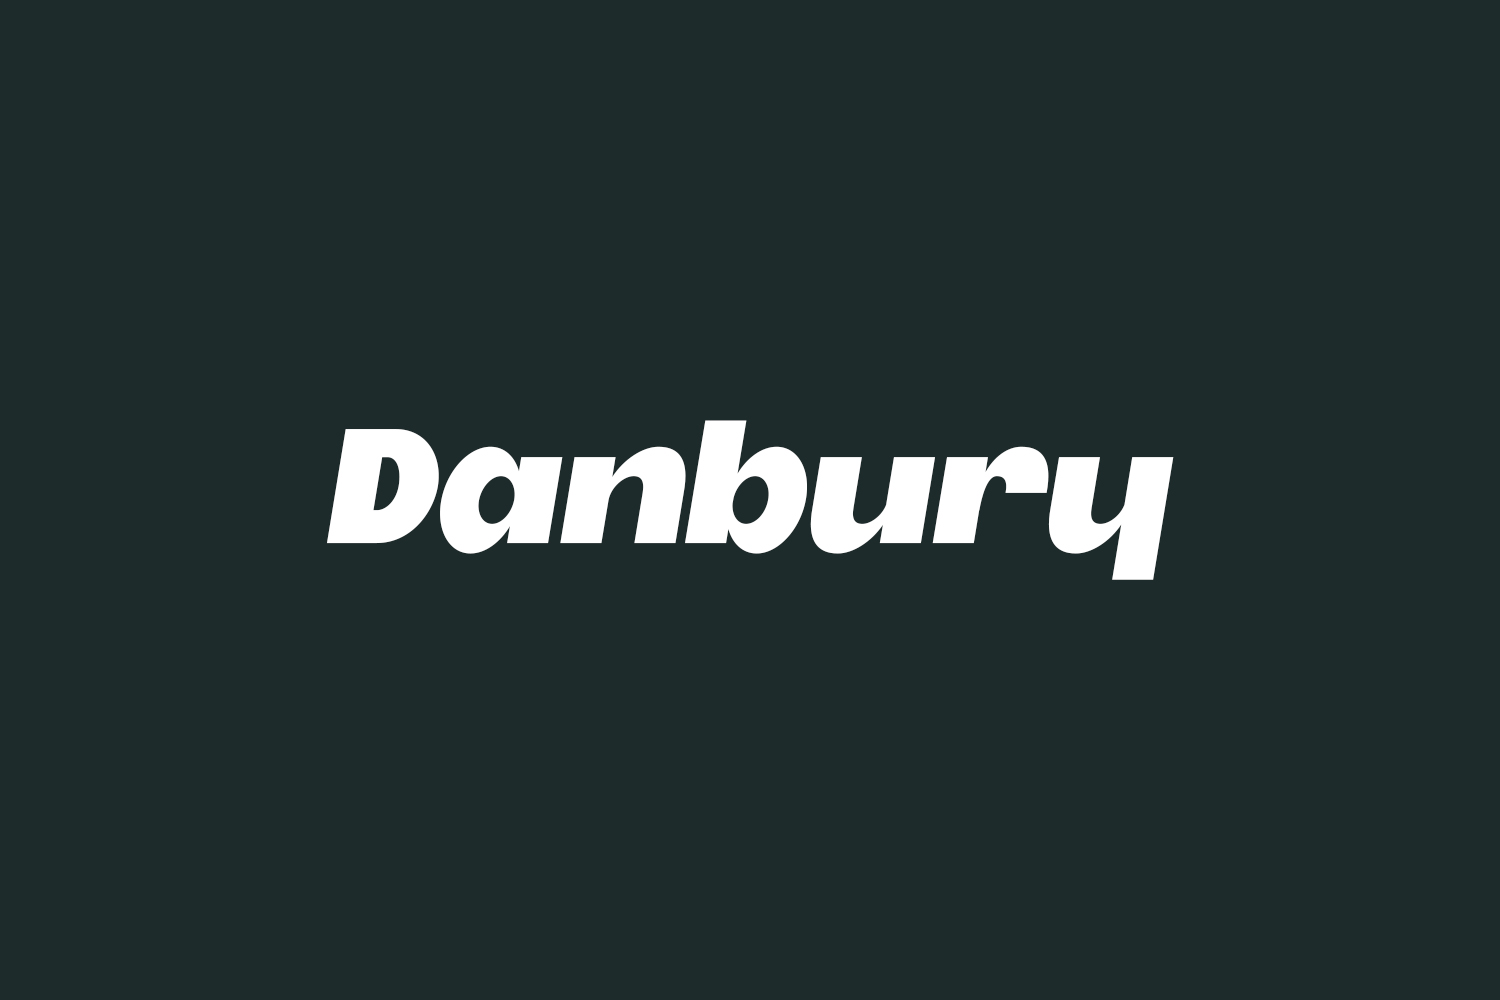 Danbury Free Font